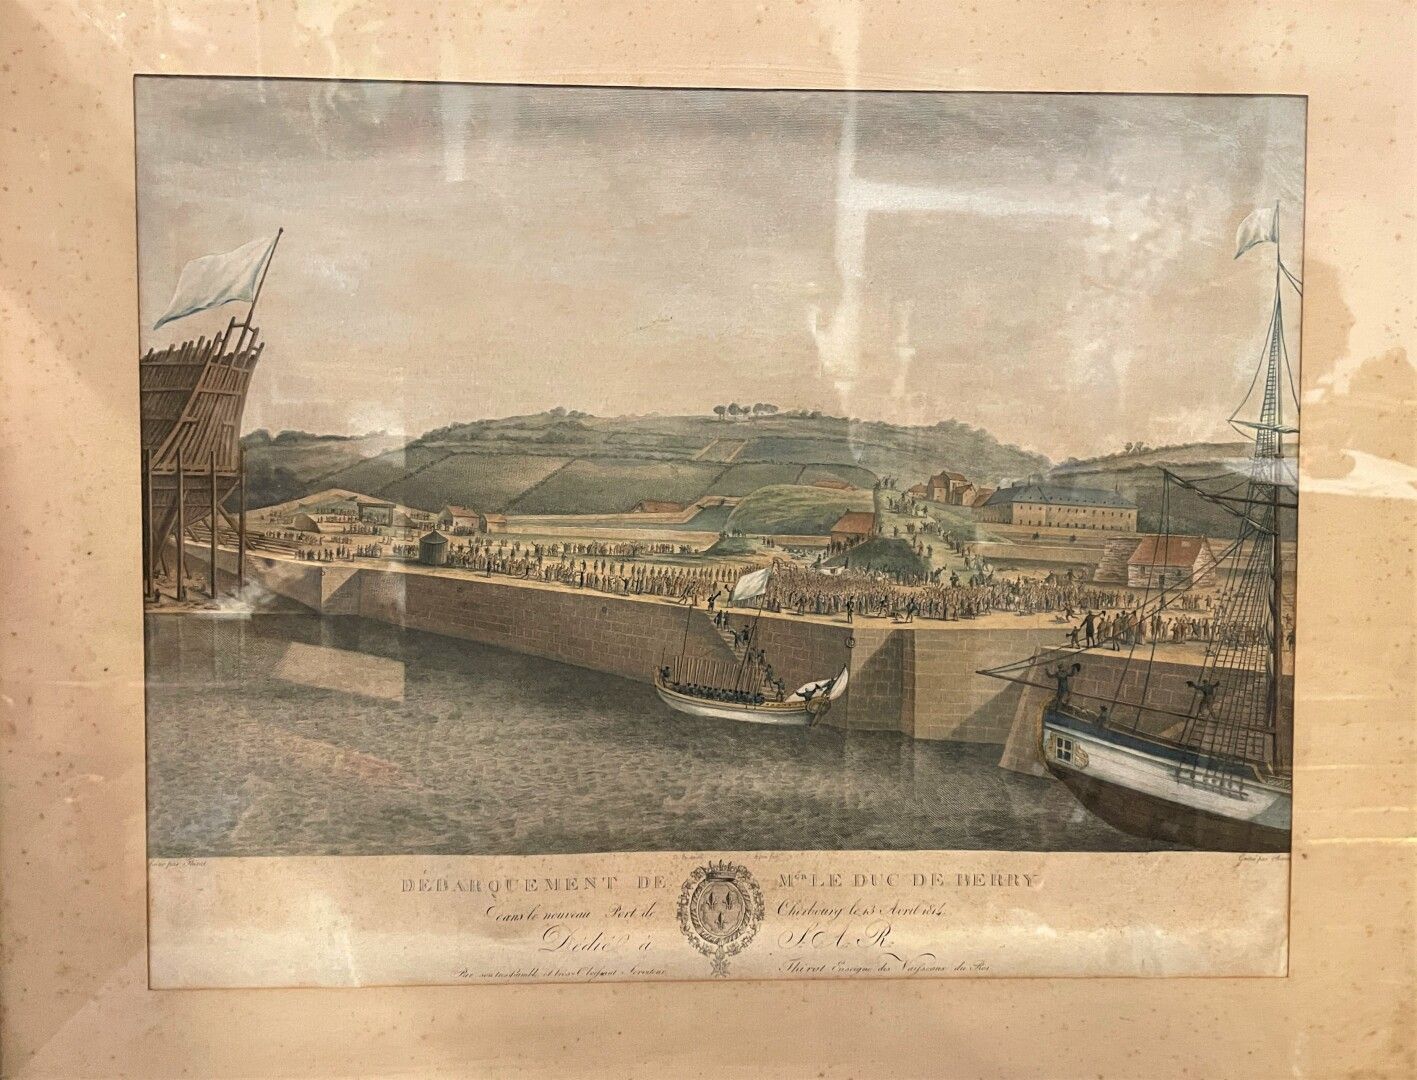 Null 贝里公爵流亡归来

"1814年4月13日贝里公爵在瑟堡登岸

彩色雕刻

35 x 45厘米（湿润和凹陷，边缘缺失）。